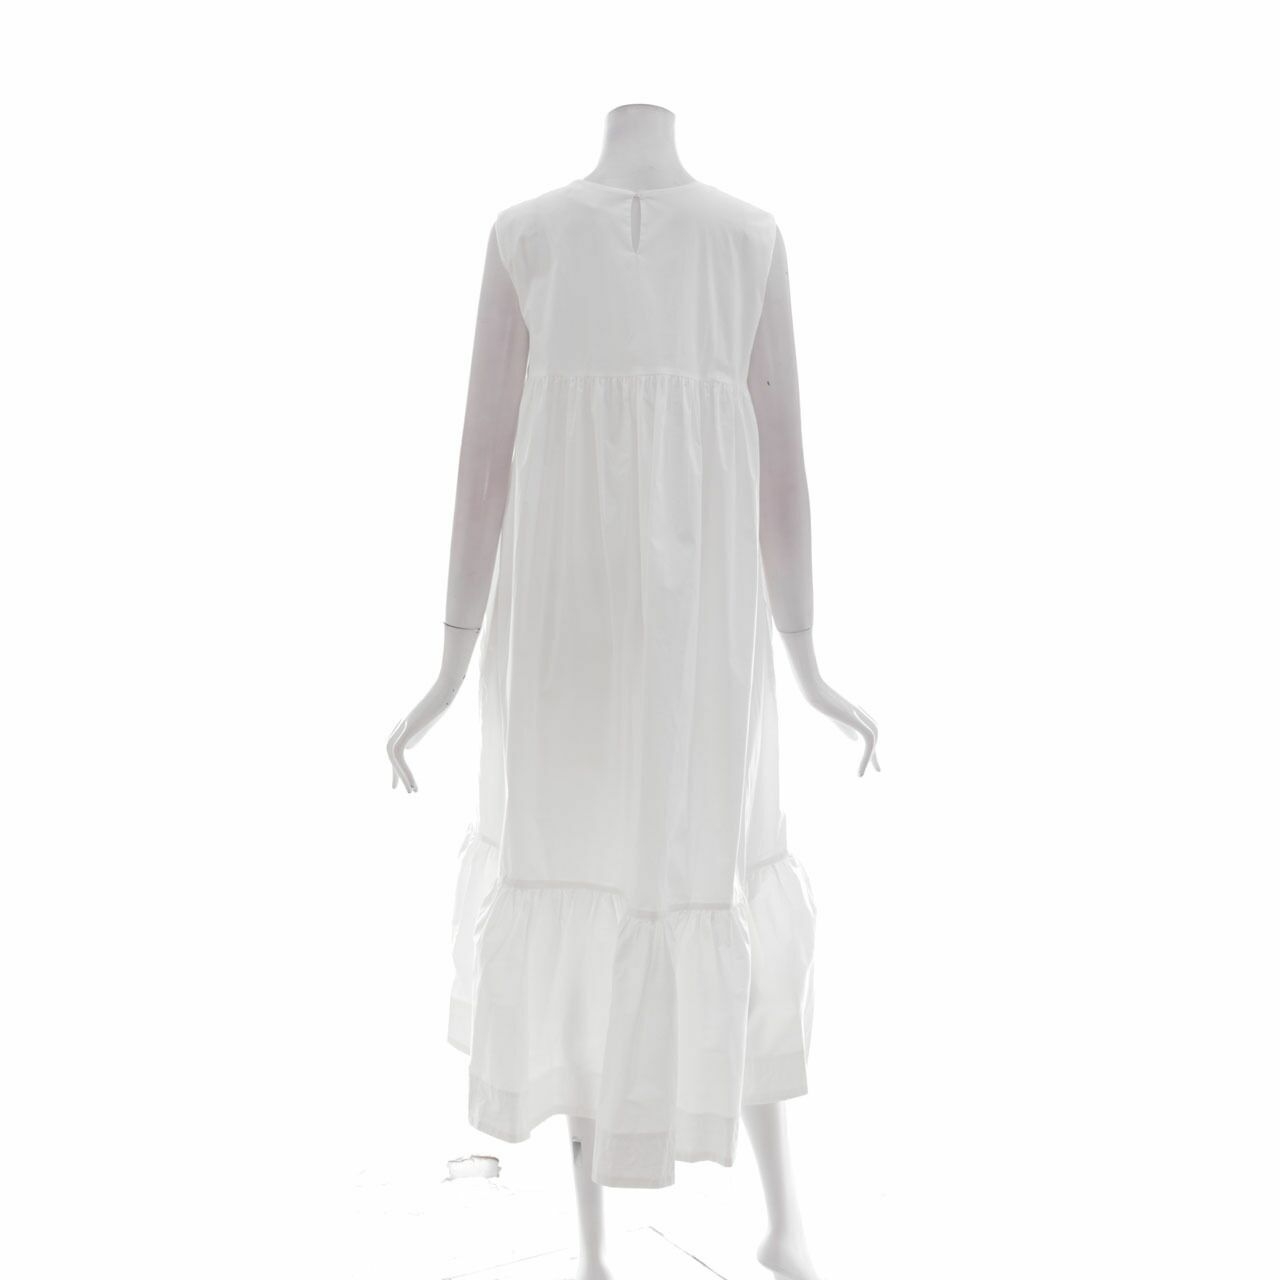 CORRA Official White Long Dress